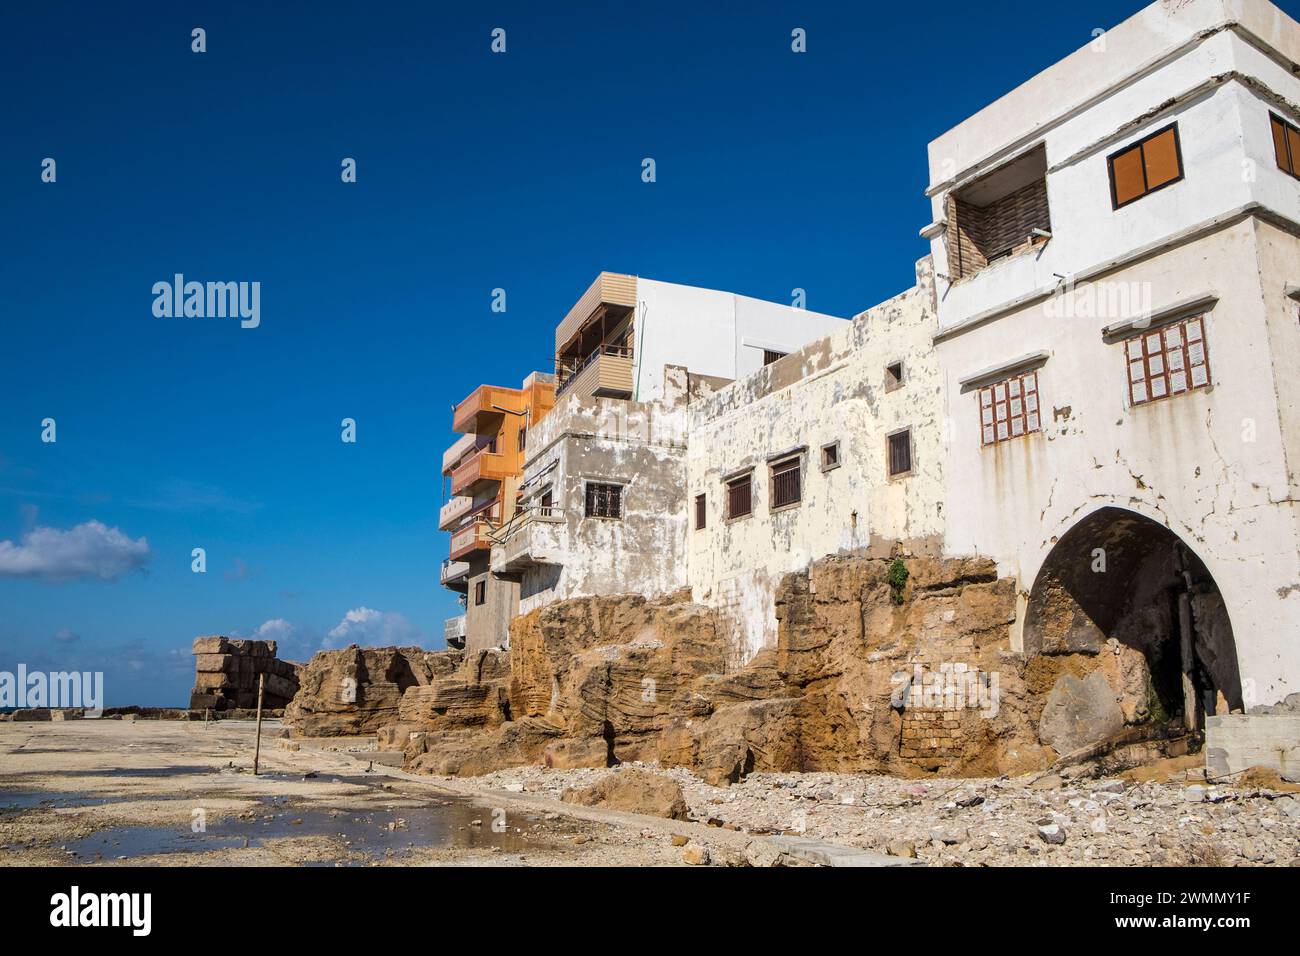 Syria,  Arwad island, landscape Stock Photo